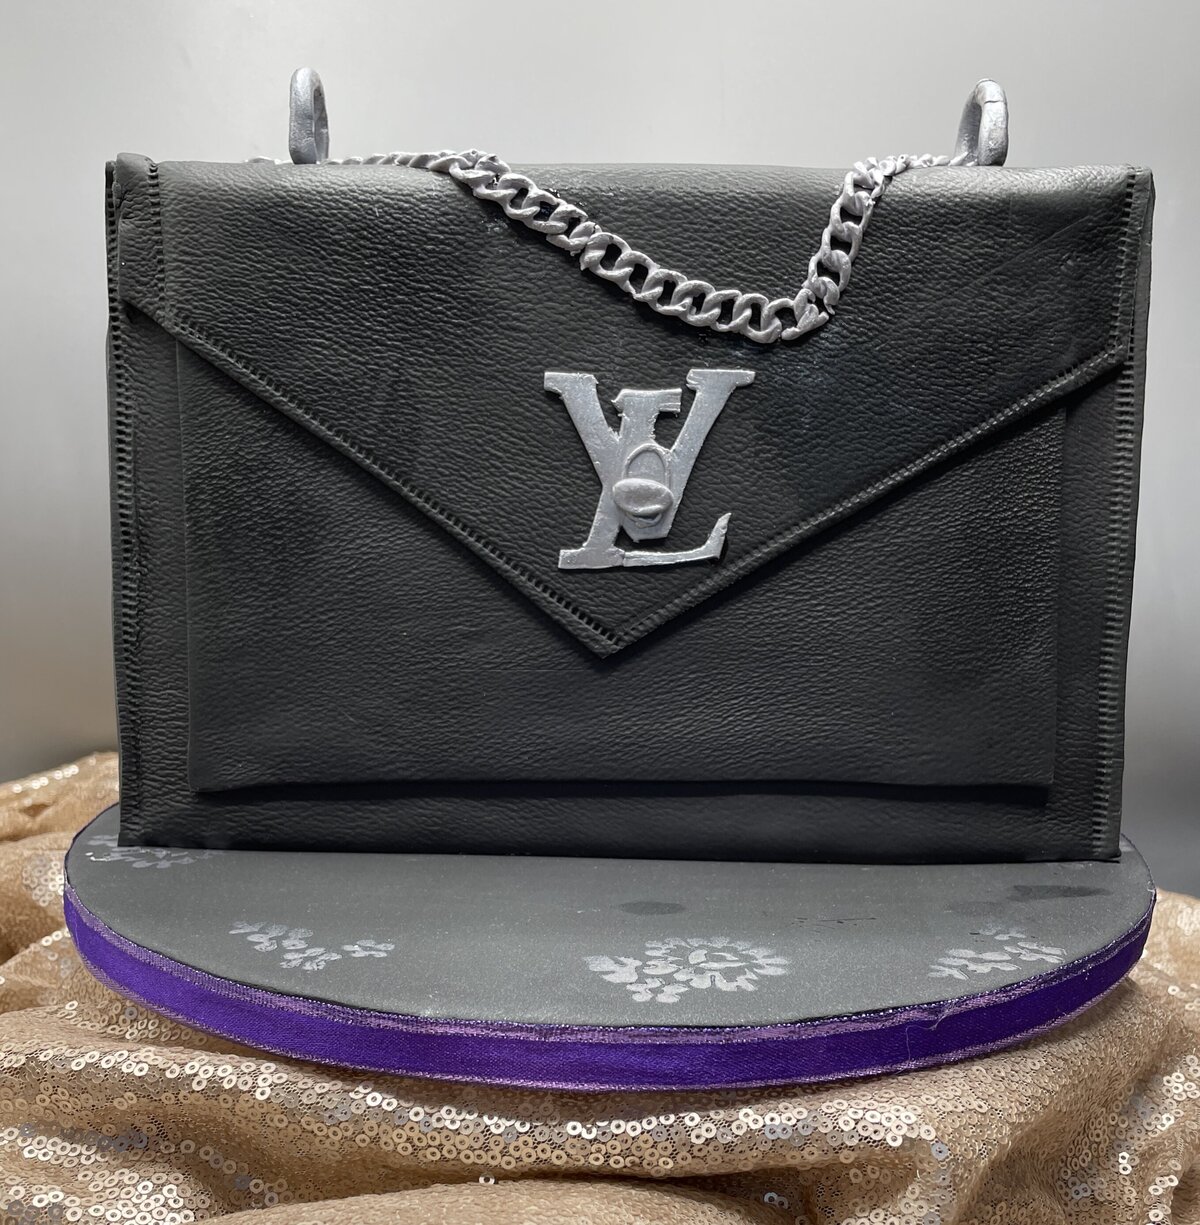 Louis Vuitton purse cake